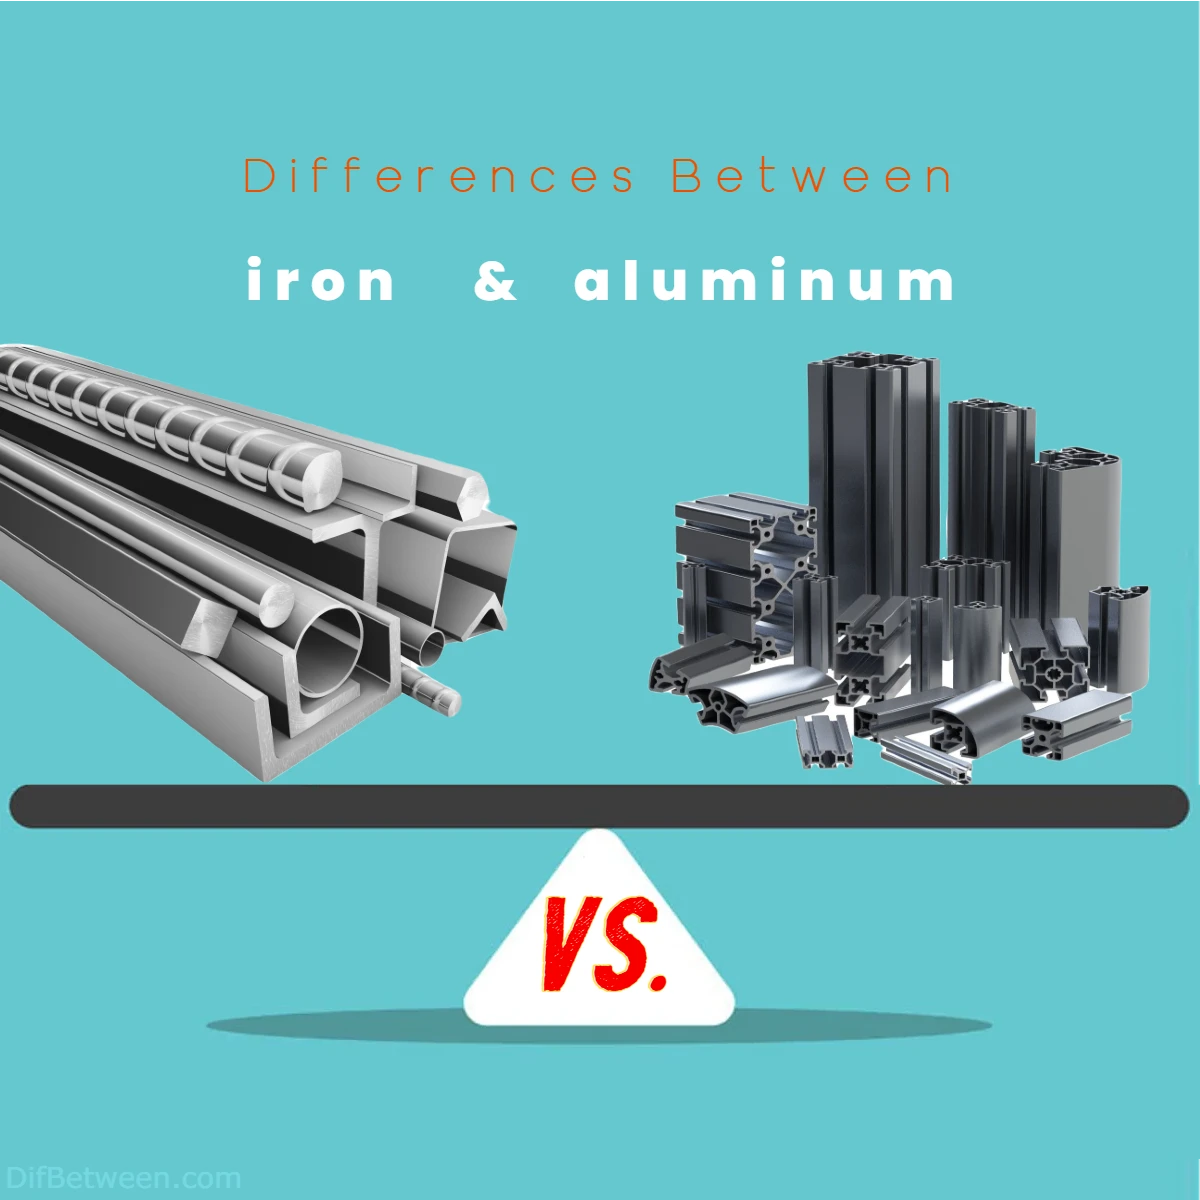 Differences Between Iron vs Aluminum